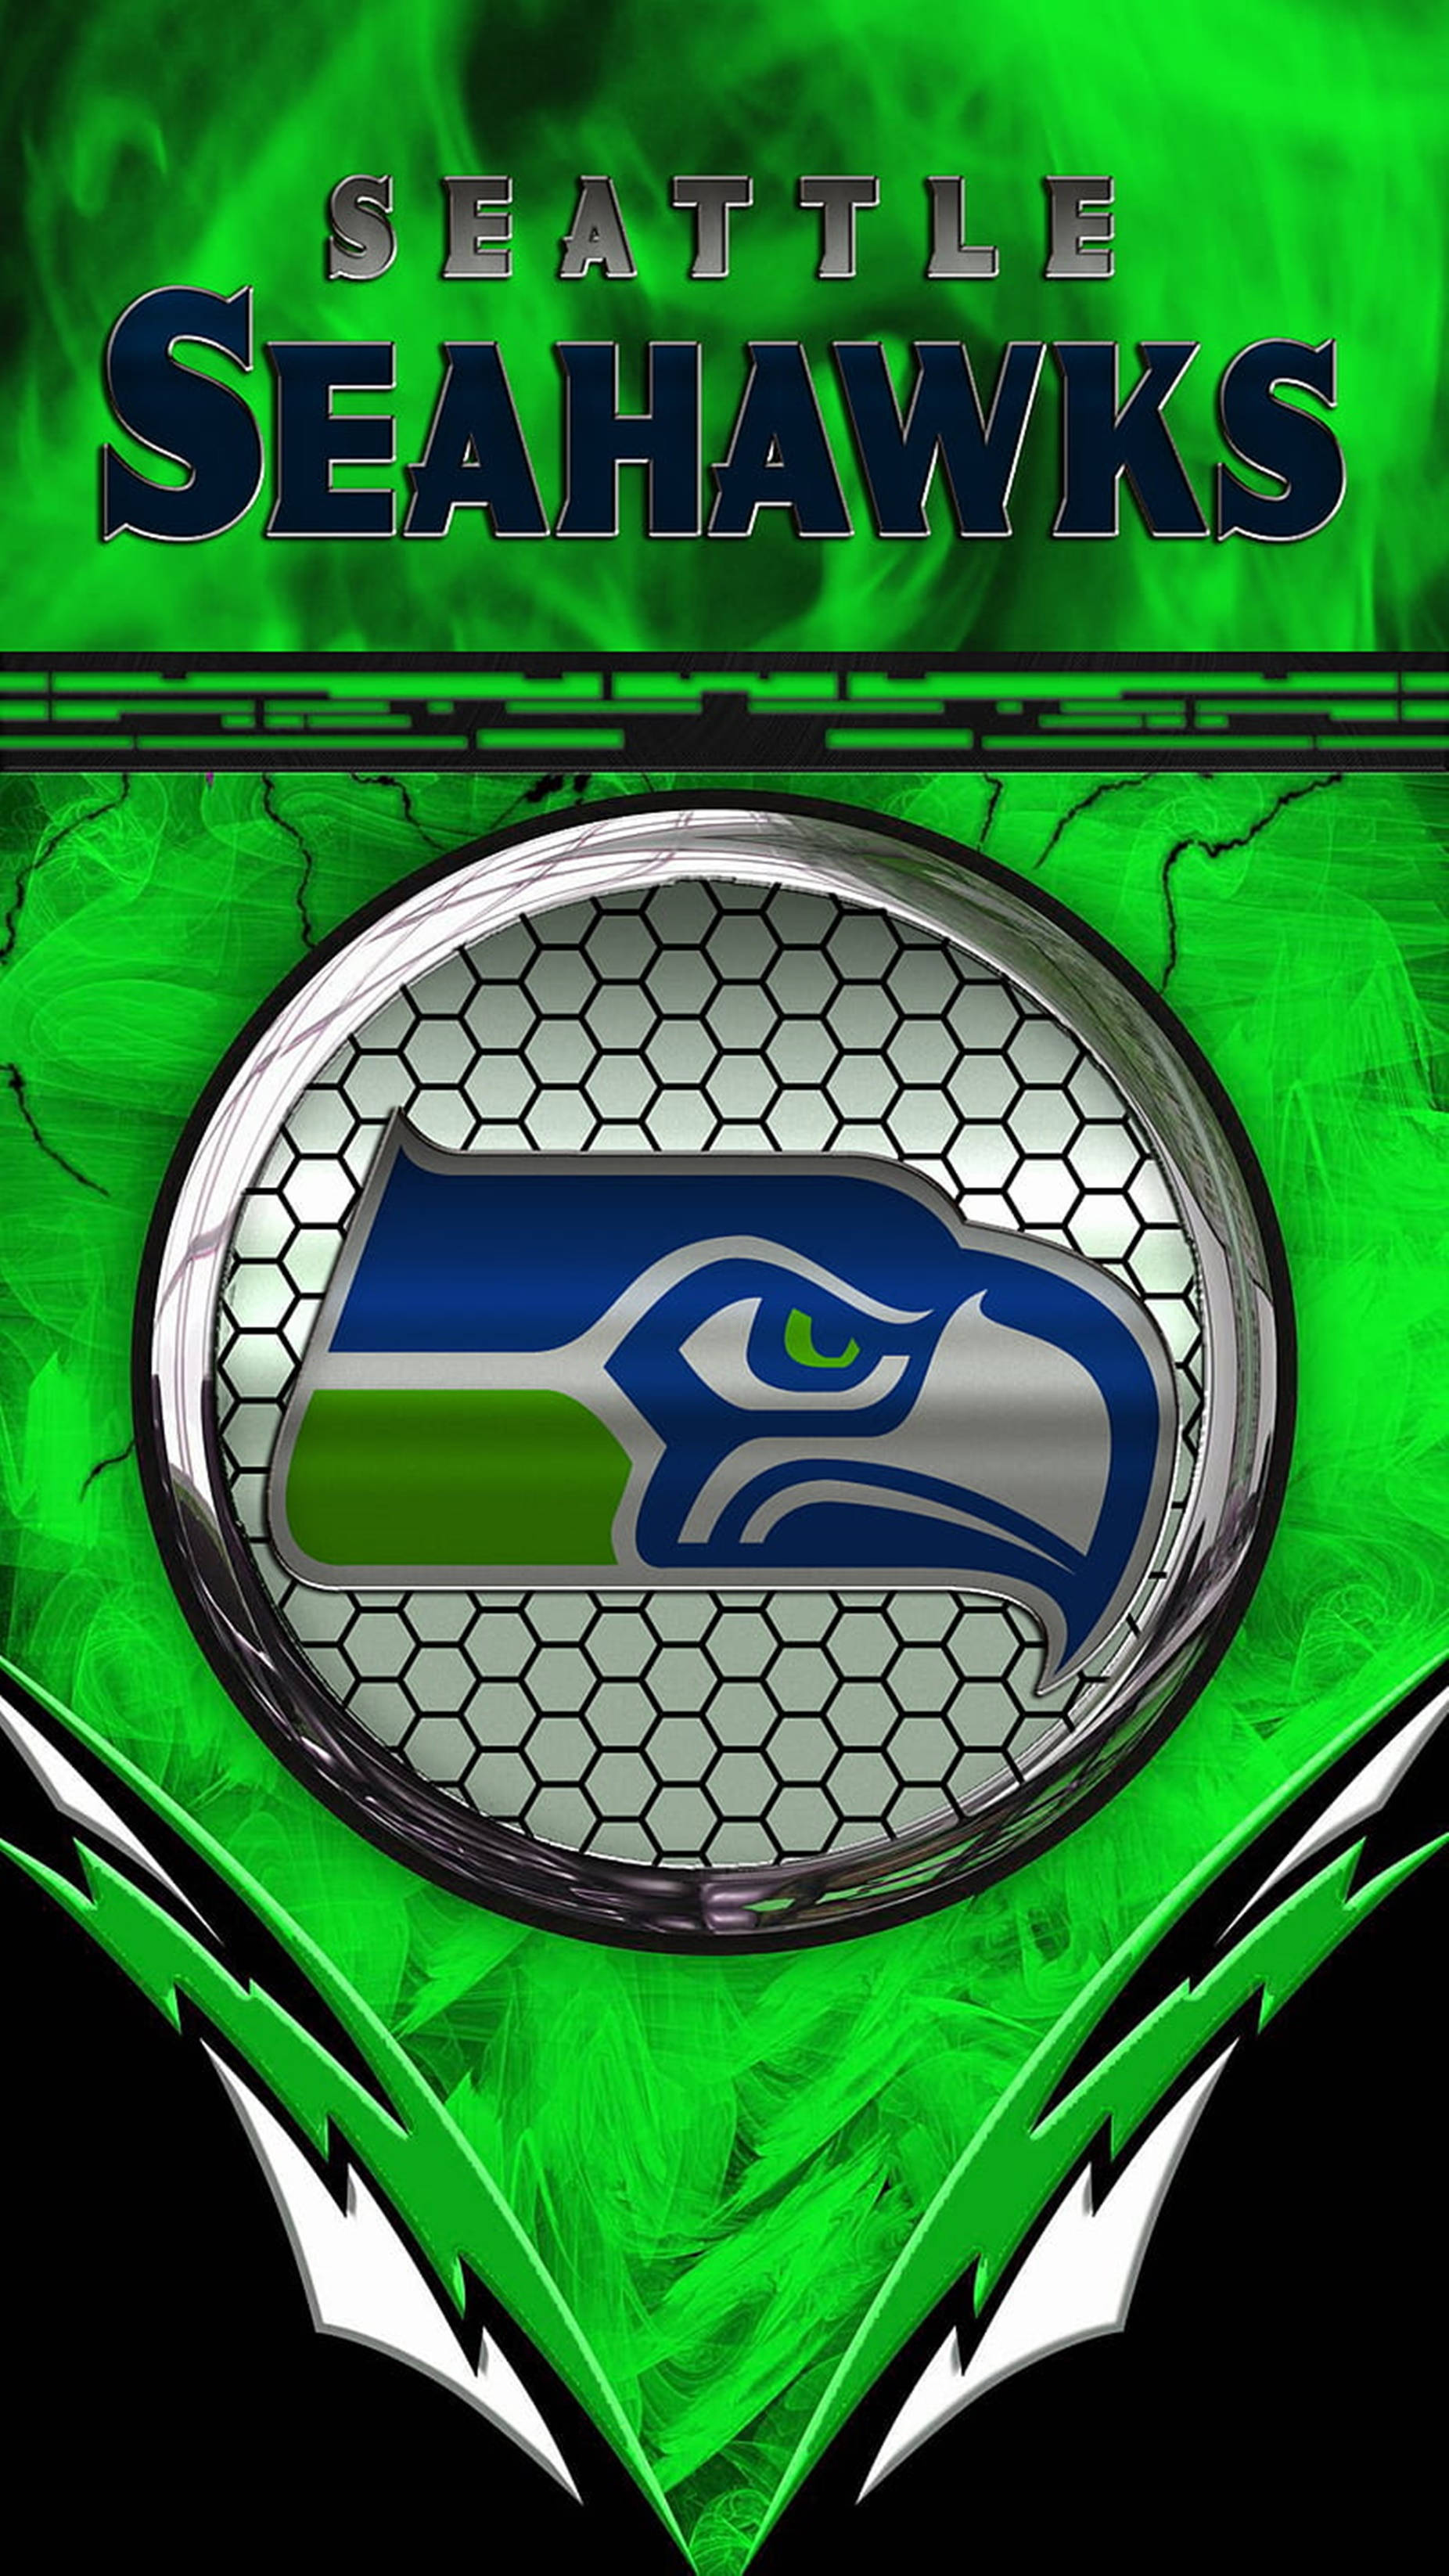 Seahawks Logo Cool Green Design Iphone Wallpaper